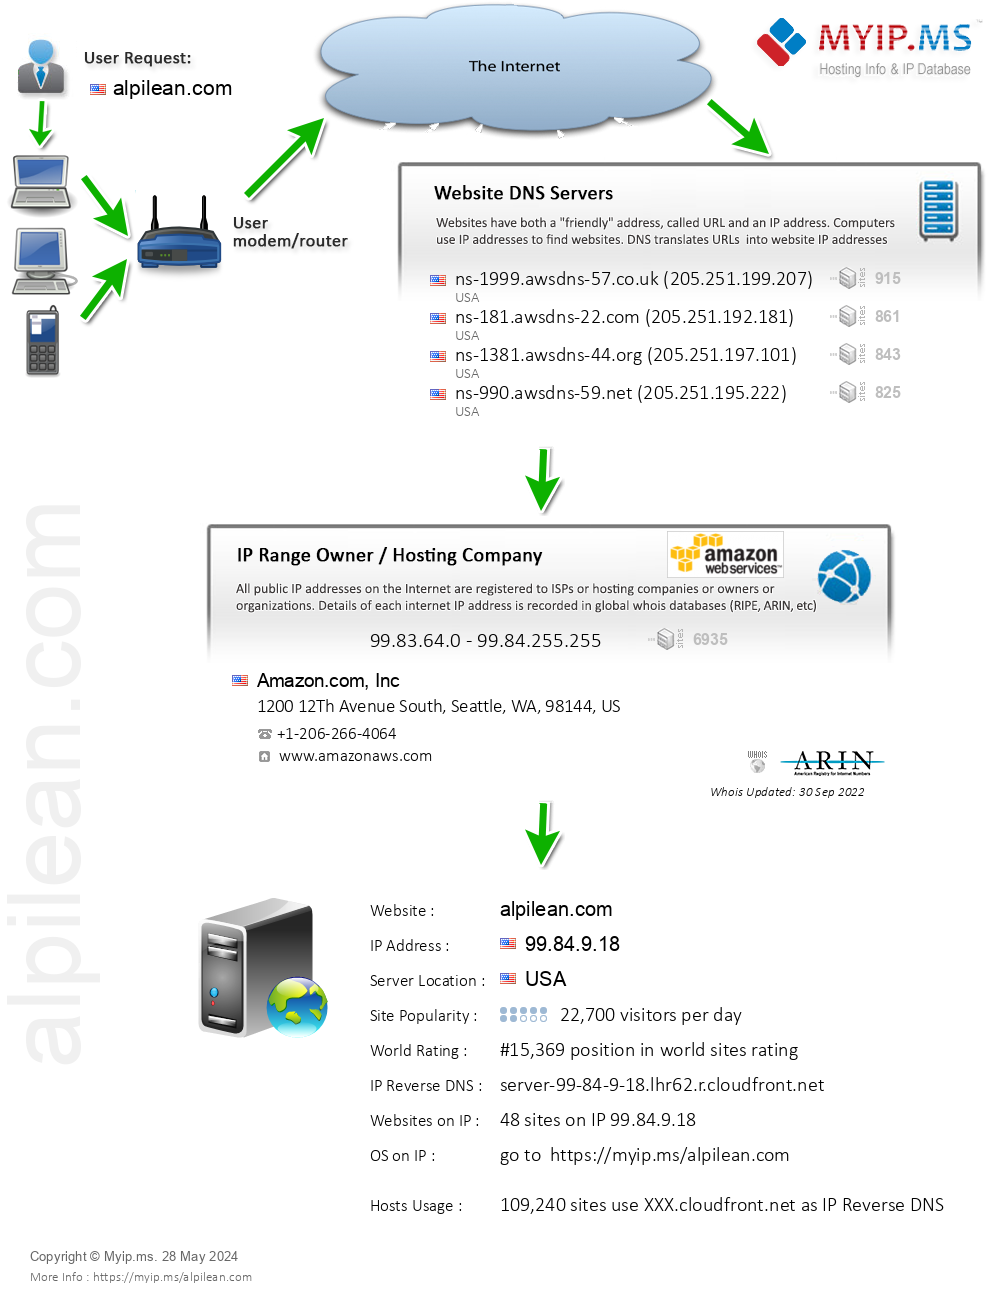 Alpilean.com - Website Hosting Visual IP Diagram